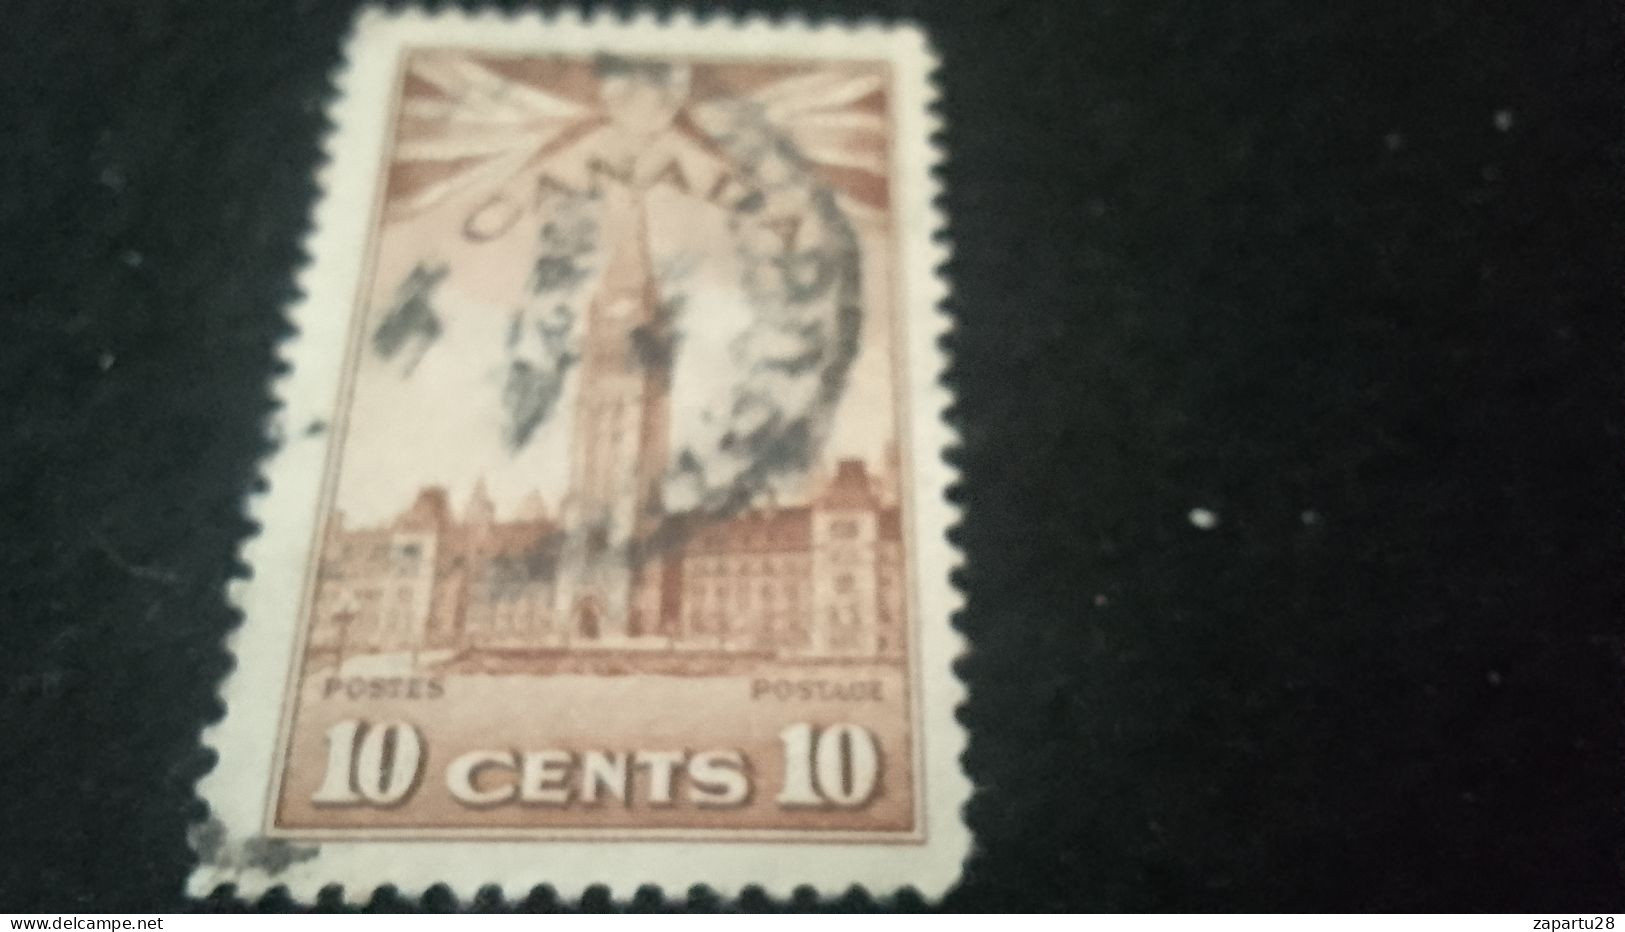 KANADA- 1940-50     10  C    DAMGALI - Used Stamps